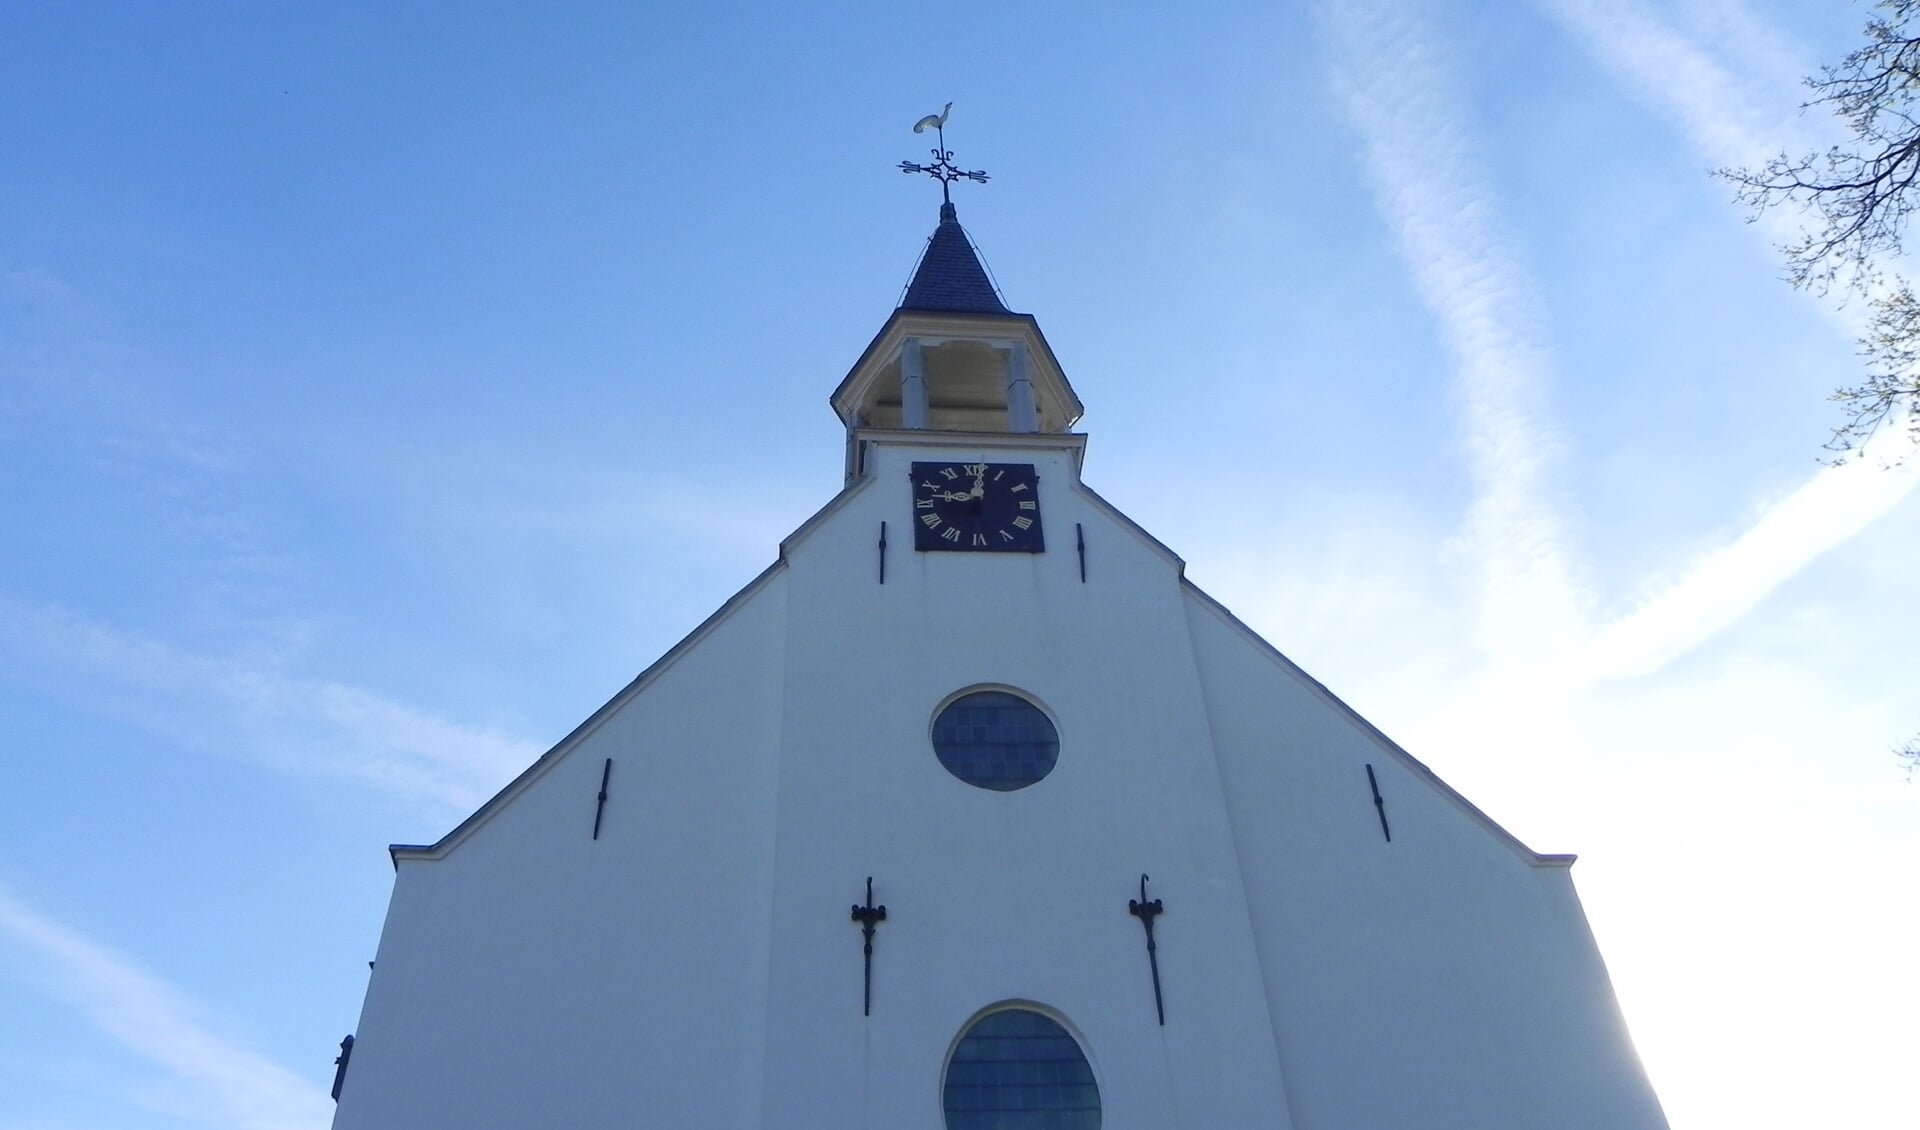 De protestantse kerk te Odijk